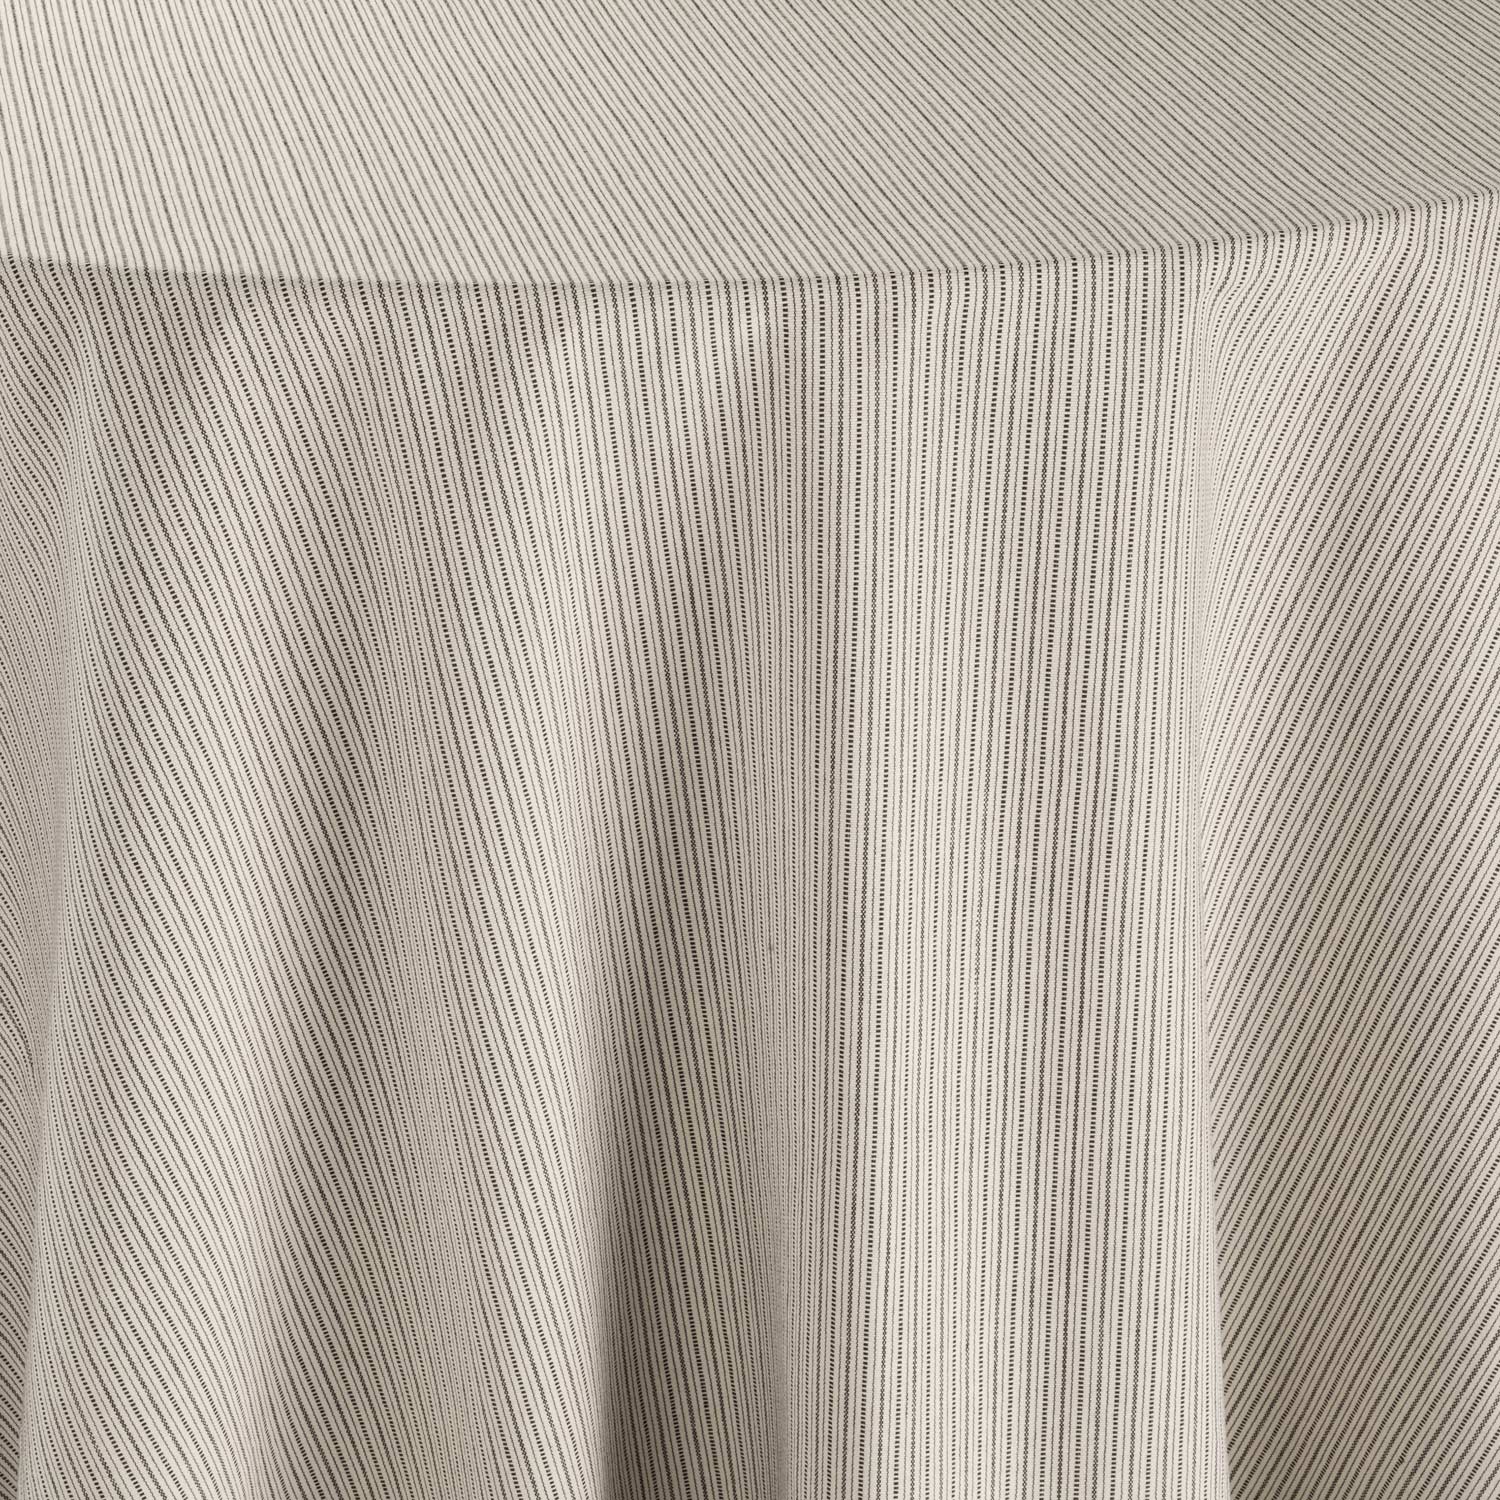 Prairie Black/Natural Table Linen - Linen Rentals | Wedding Table Linen ...